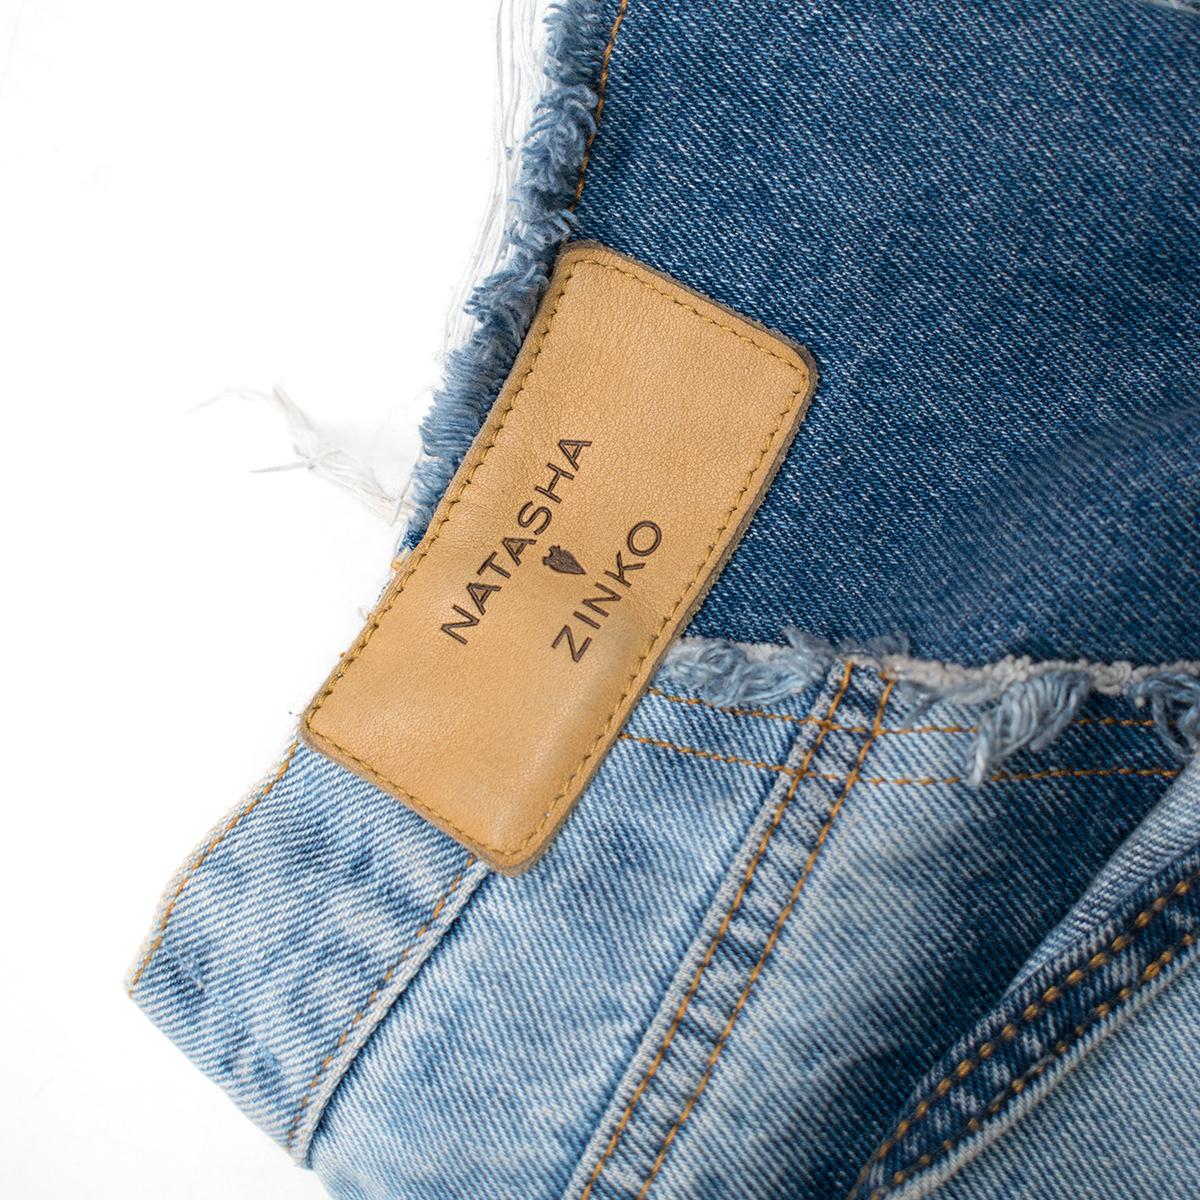 Women's Natasha Zinko Two-Tone Distressed Cropped Jeans US 4 For Sale